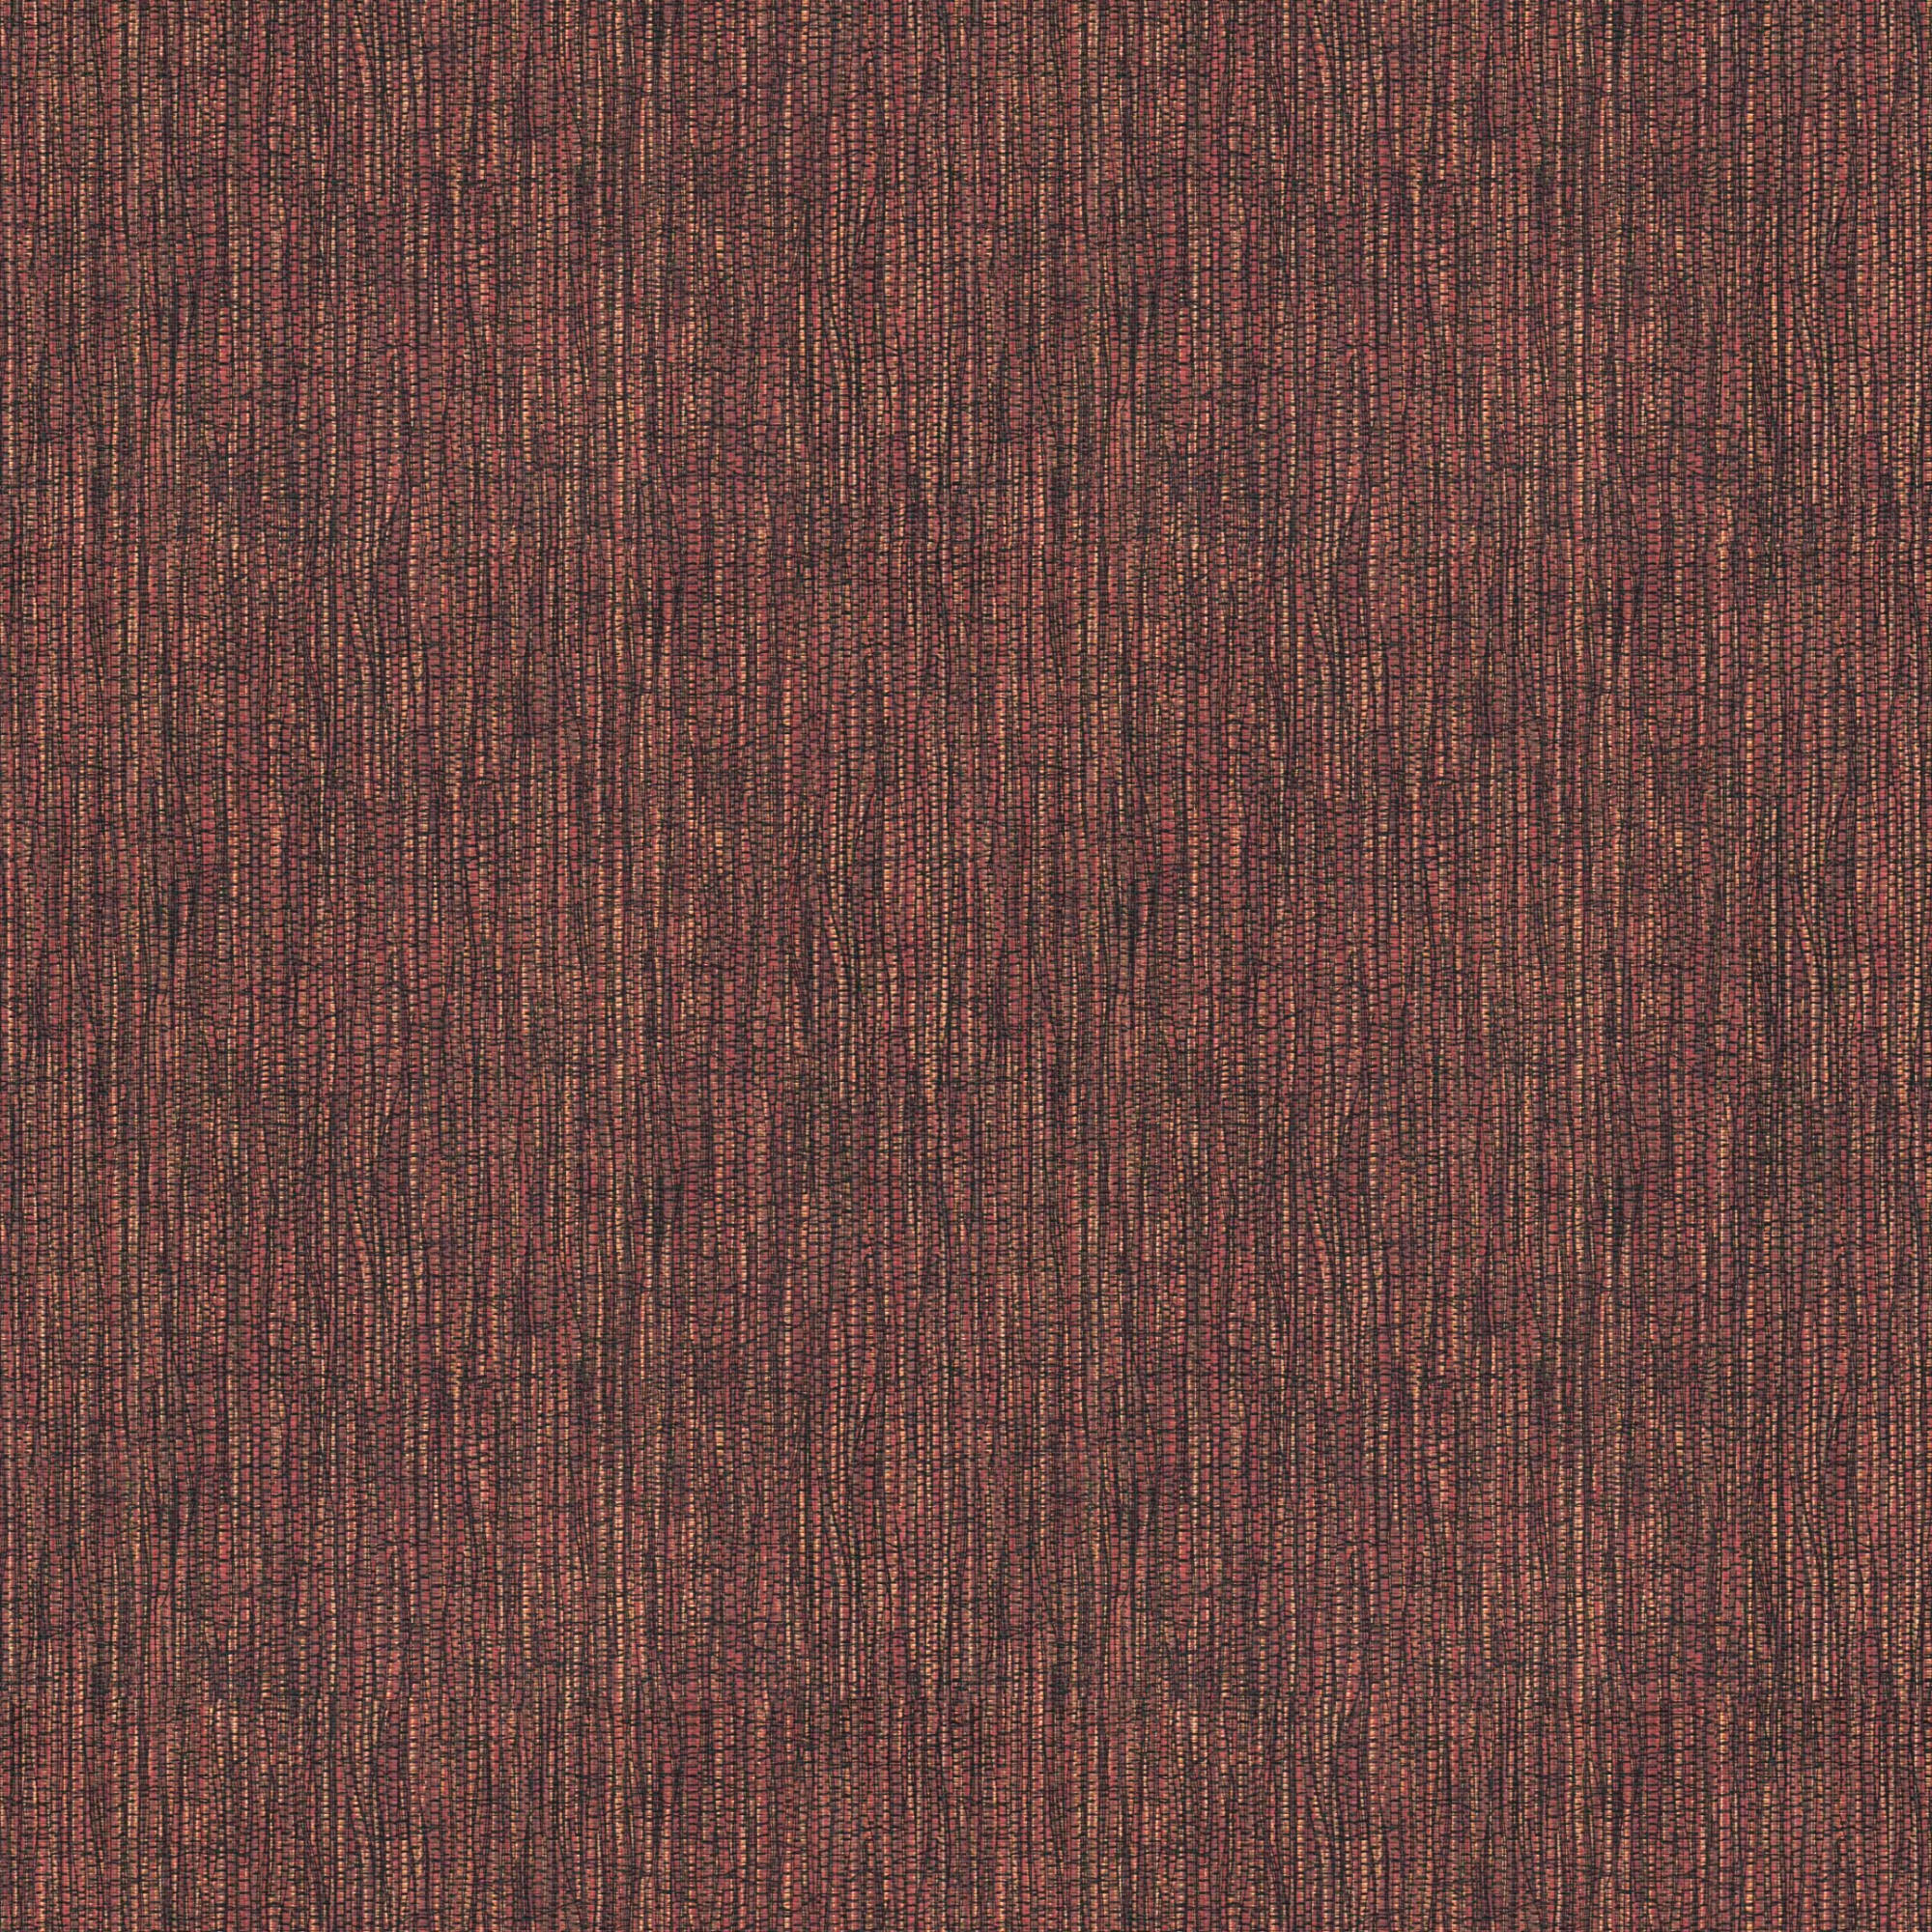 VLIESTAPETE  - Rot, Basics, Papier/Kunststoff (52/1000cm)